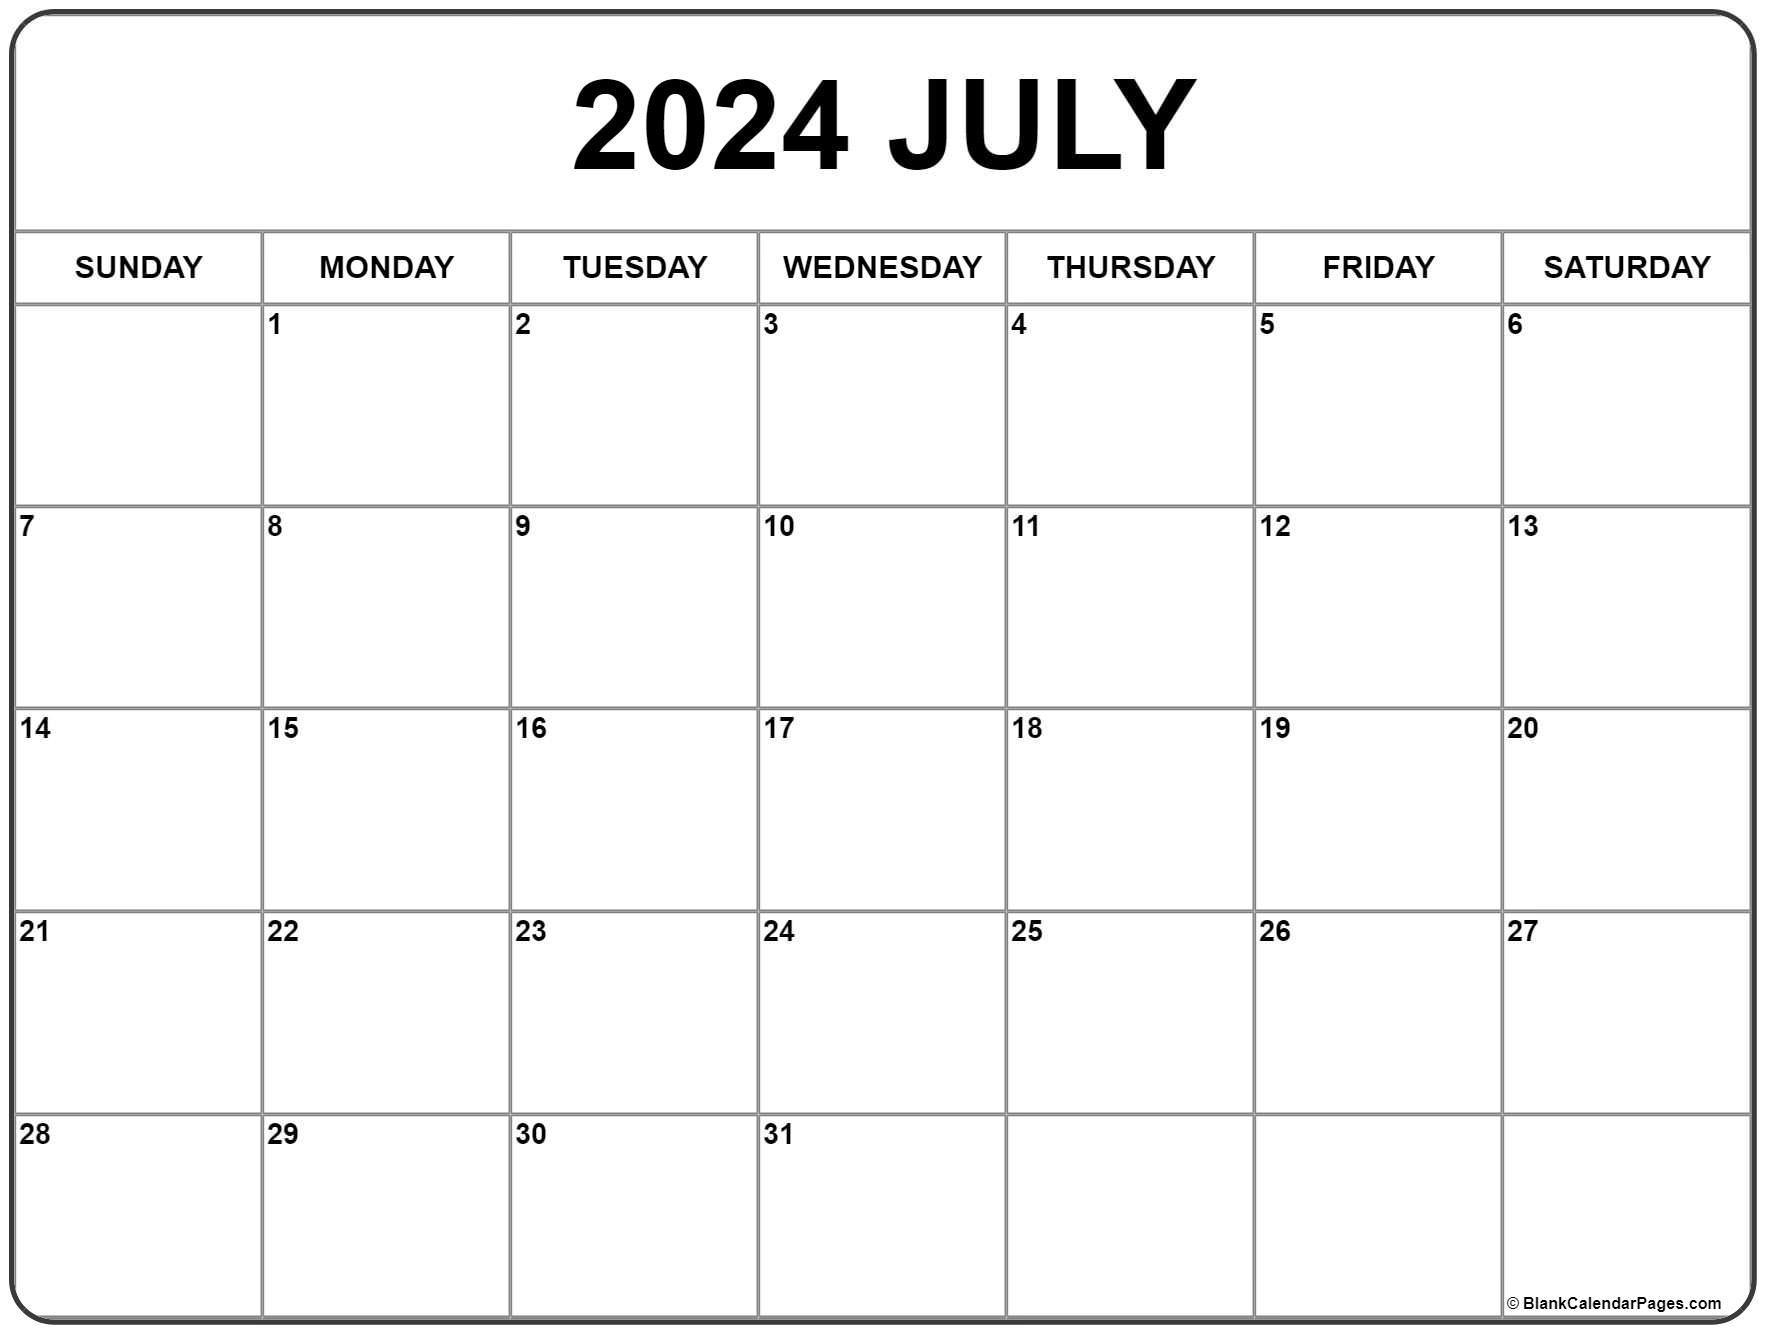 July 2024 Calendar | Free Printable Calendar inside Free Printable July 2024 Monthly Calendar